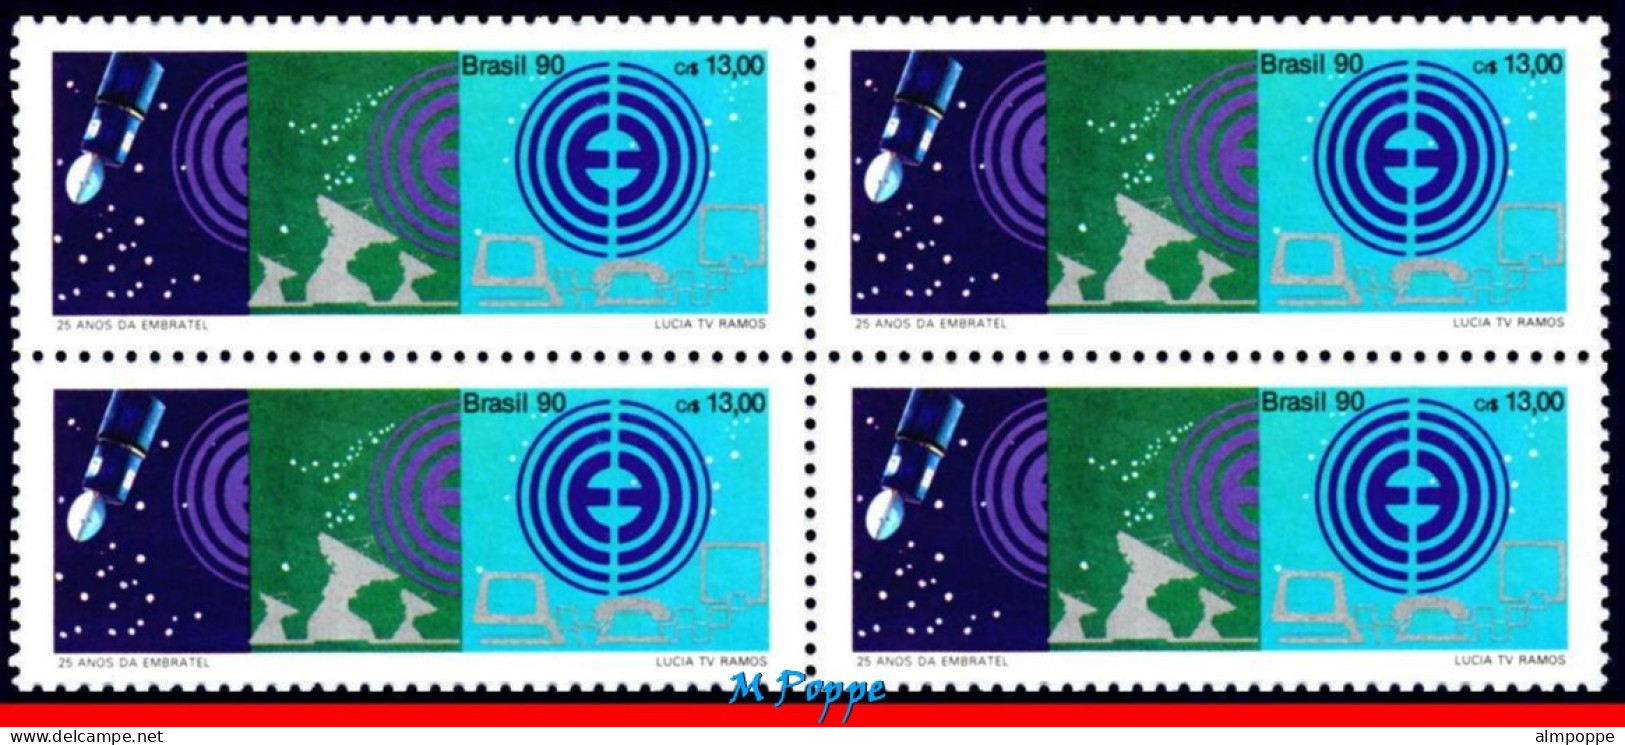 Ref. BR-2281-Q BRAZIL 1990 - EMBRATEL, 25TH ANNIV.,SPACE, SATELLITE, MI# 2376,BLOCK MNH, TELECOMMUNICATION 4V Sc# 2281 - Blocks & Sheetlets